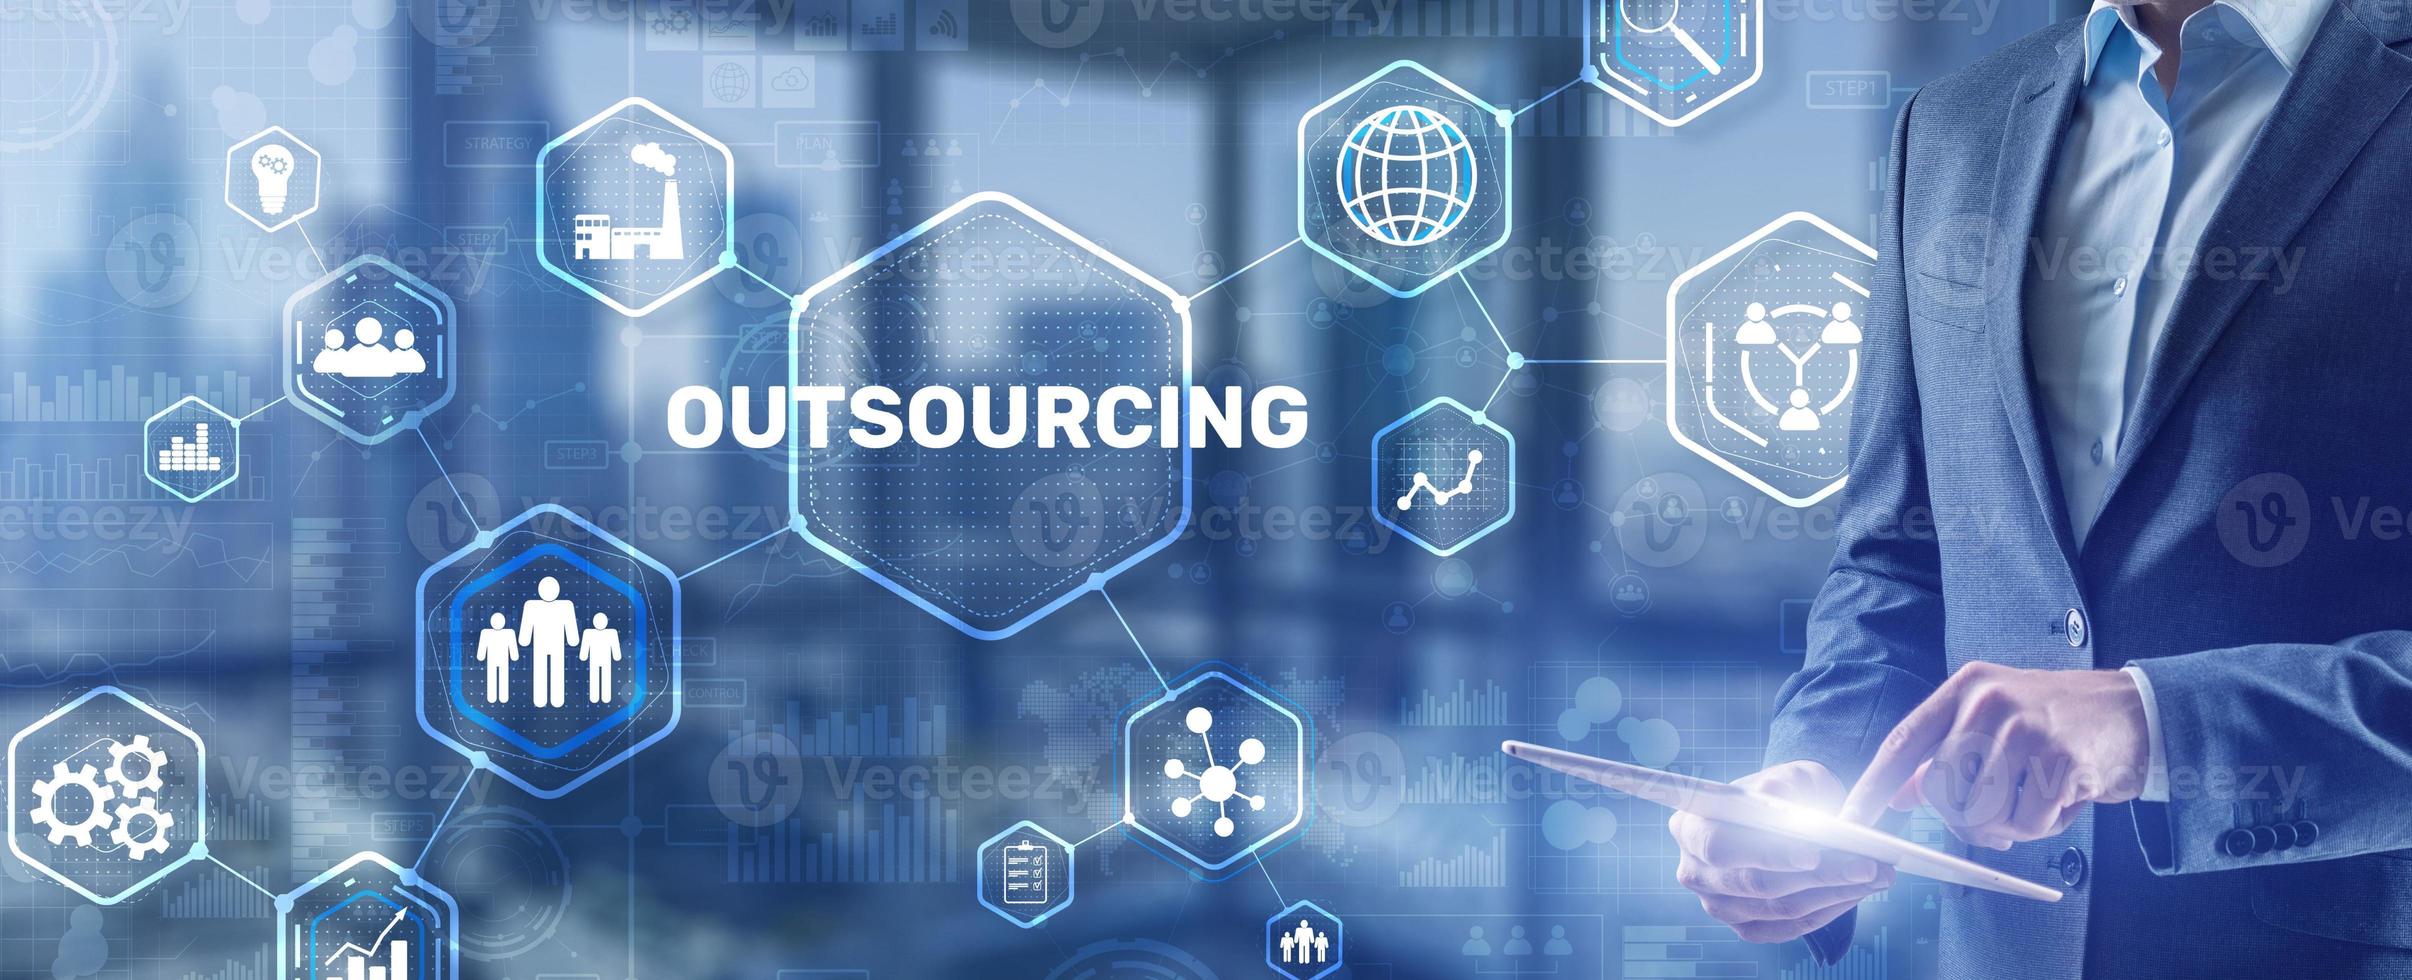 outsourcing 2021 mänskliga resurser affärs internet teknik koncept. foto